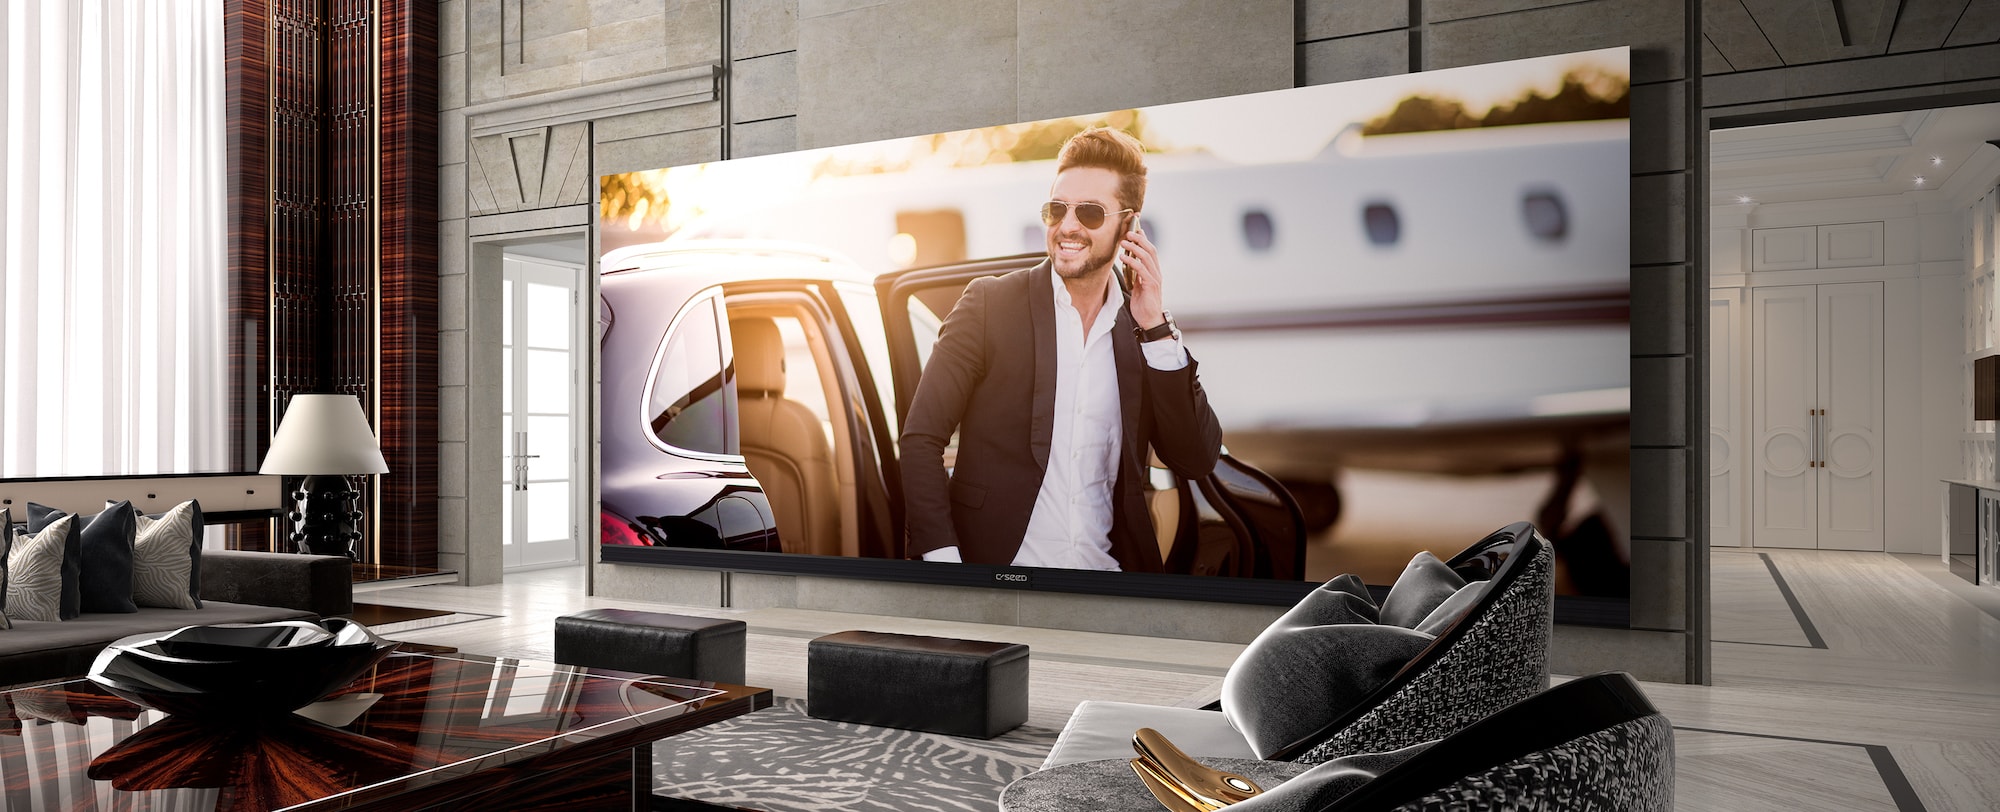 Der weltweit größte 4K Widescreen TV: C SEED 262 2